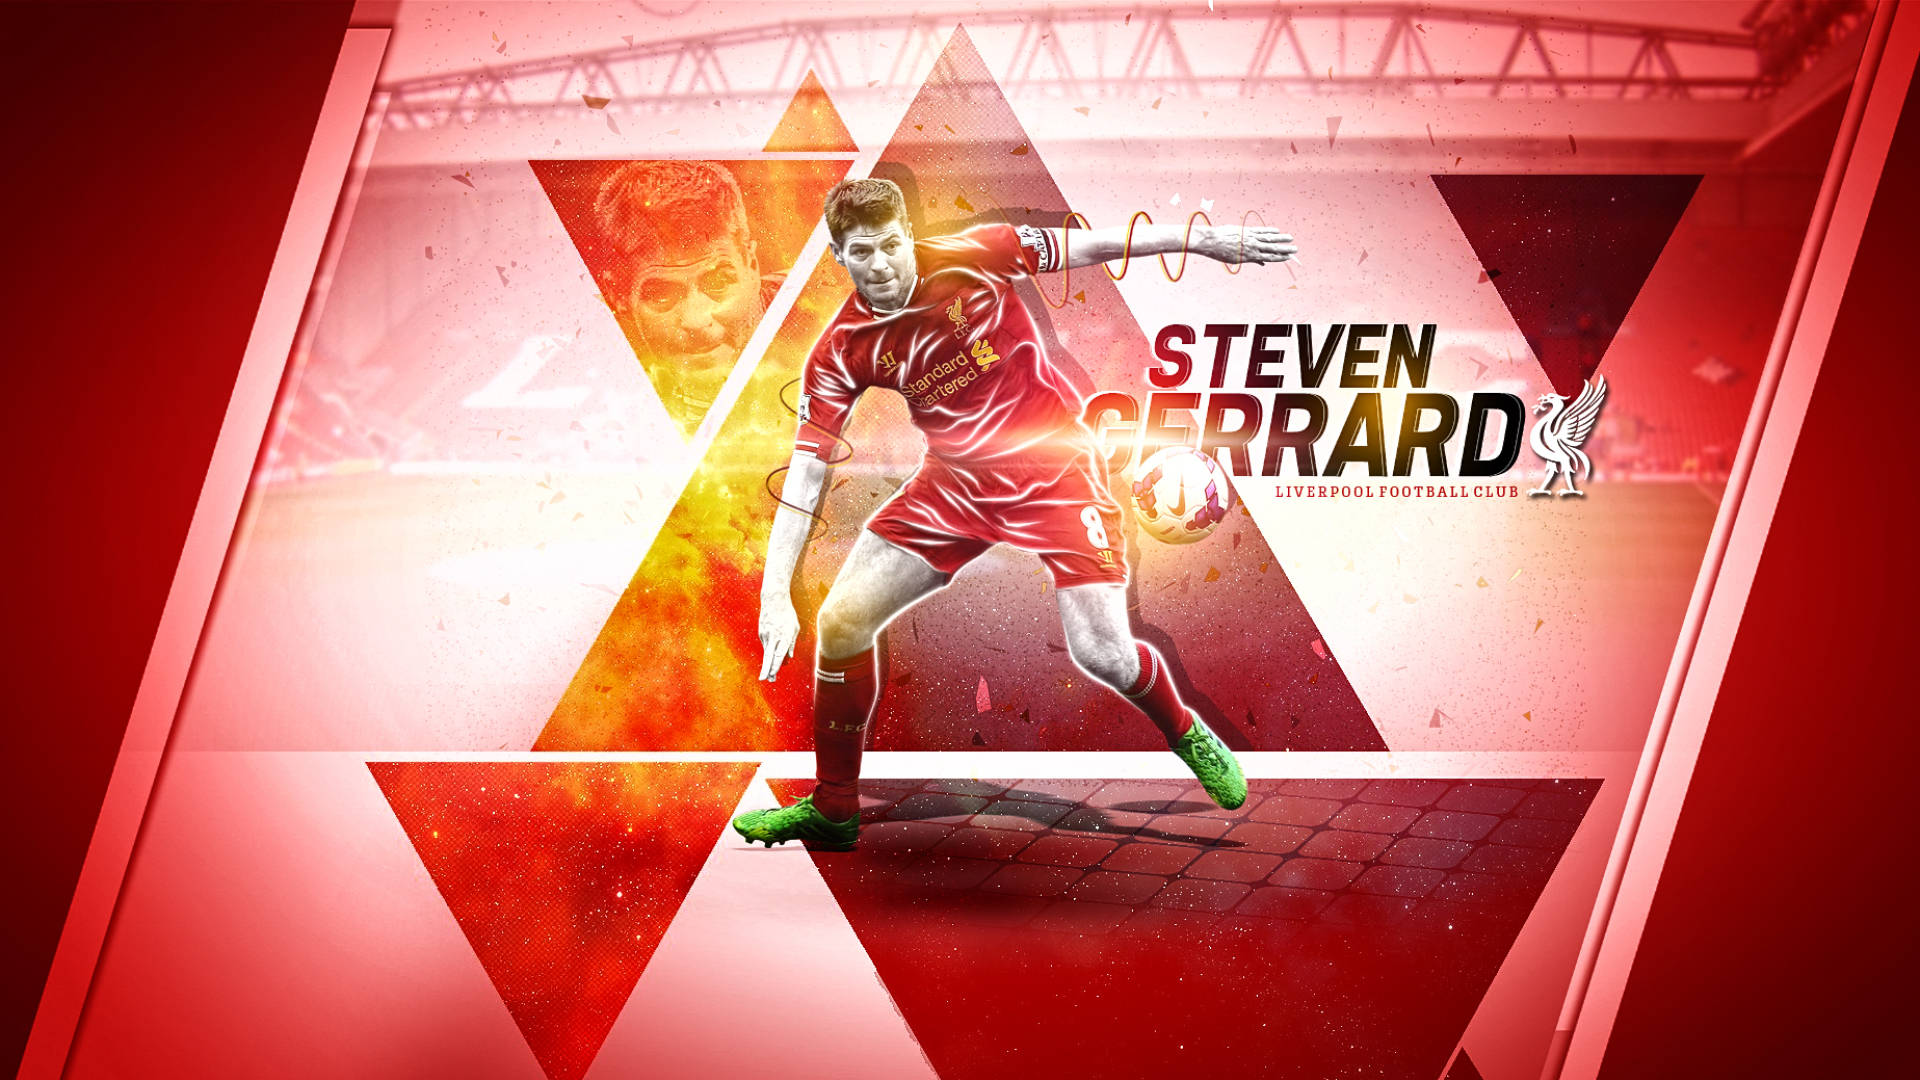 Steven Gerrard Liverpool Football Club